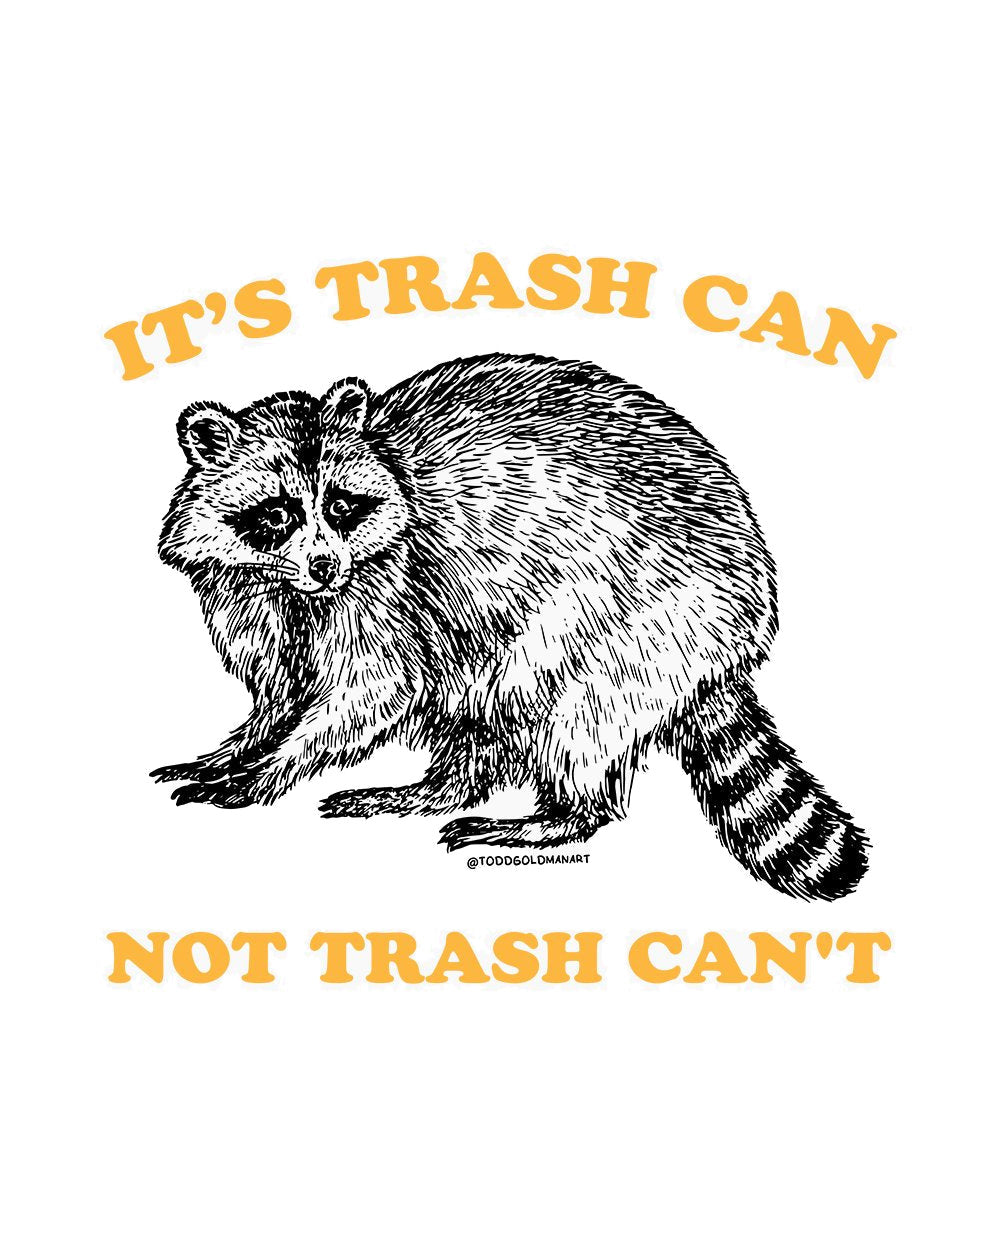 Trash Can Not Can't Funny Slogan Raccoon Vermin Trash Panda Humorous Cotton T-Shirt